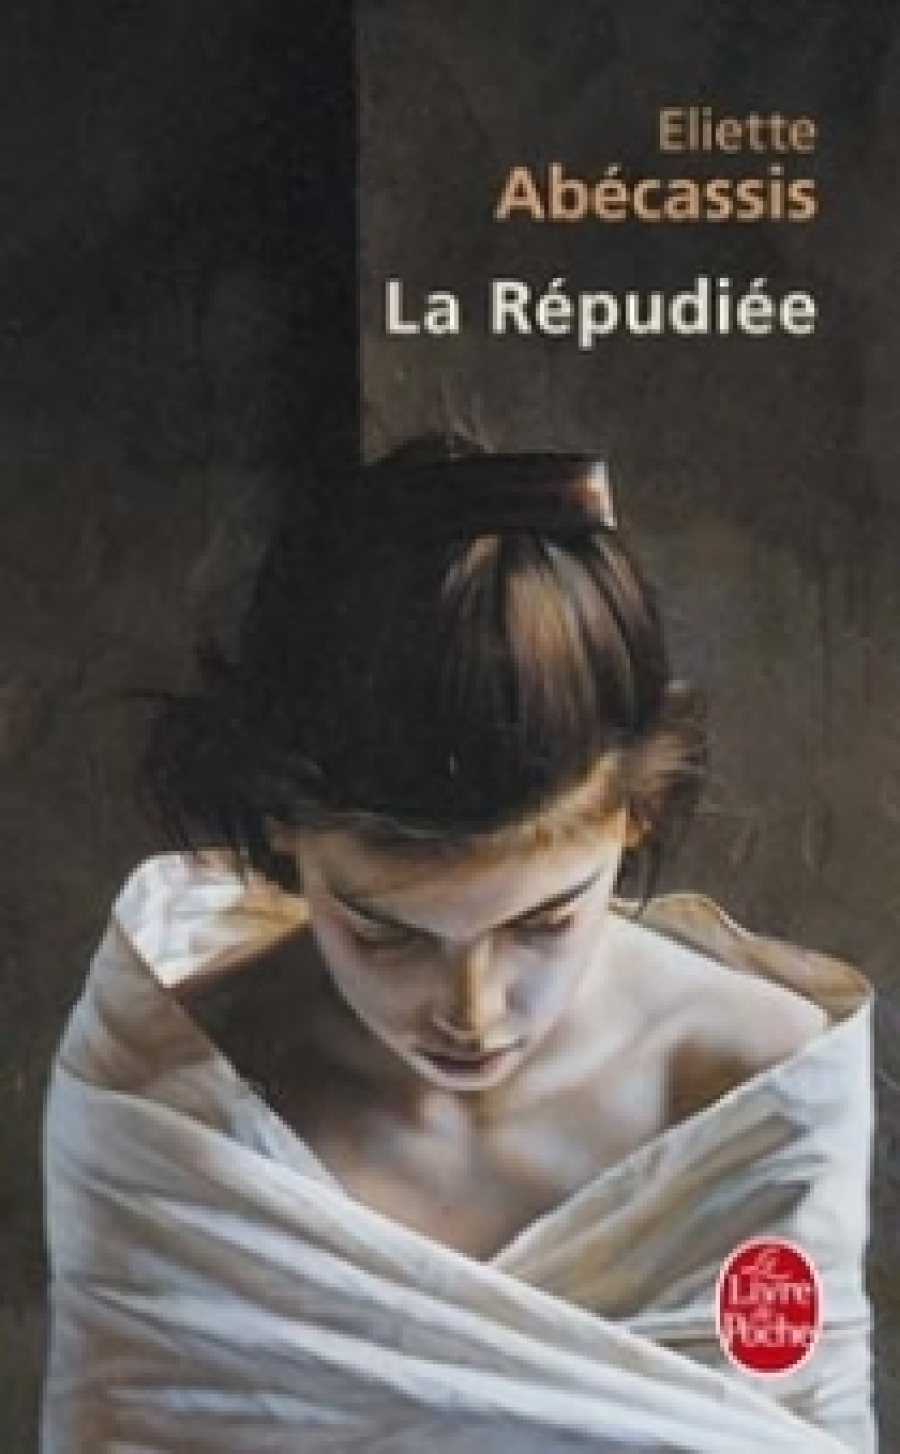 Eliette A. Repudiee, La 